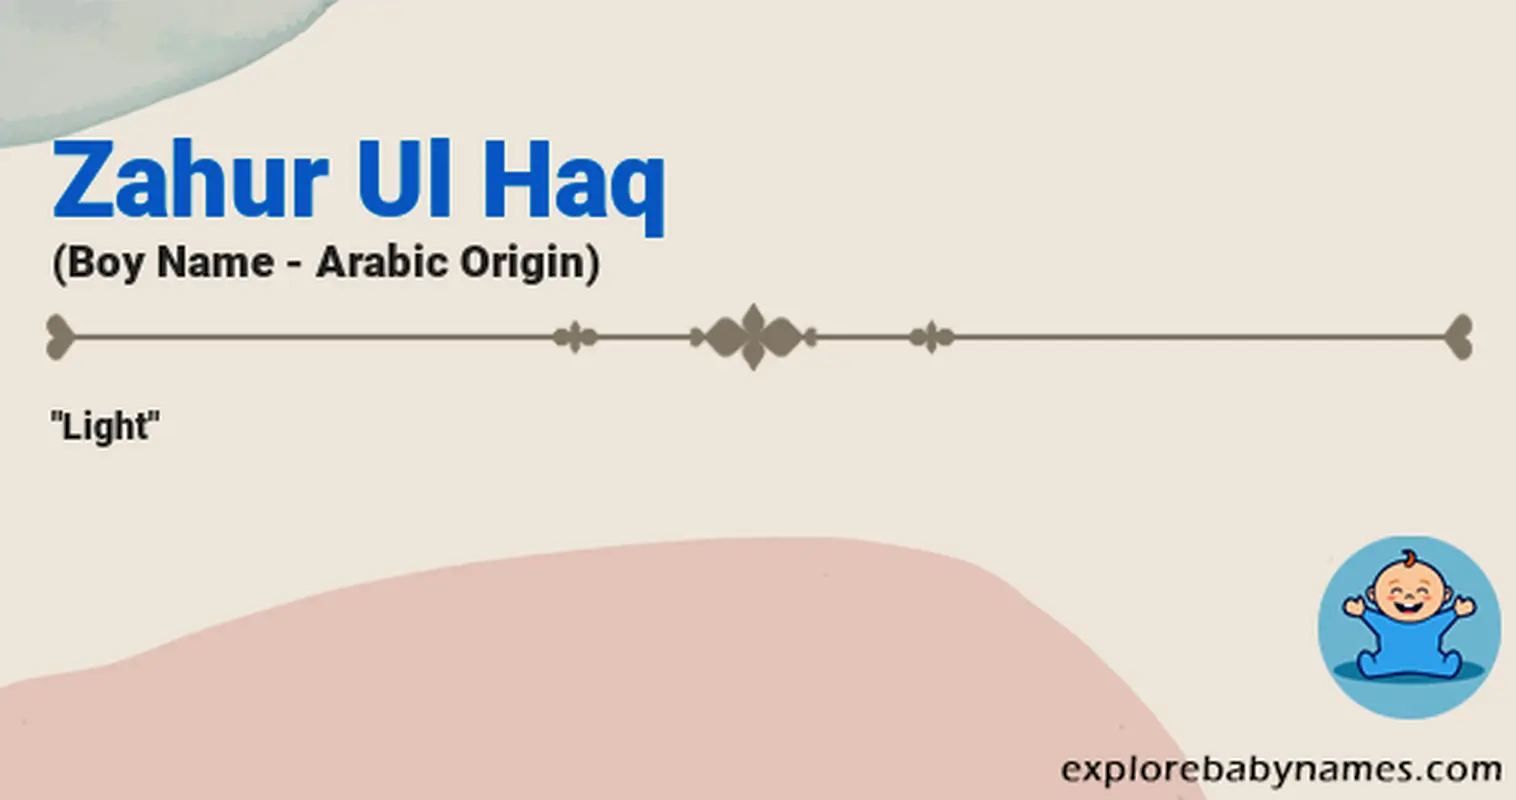 Meaning of Zahur Ul Haq